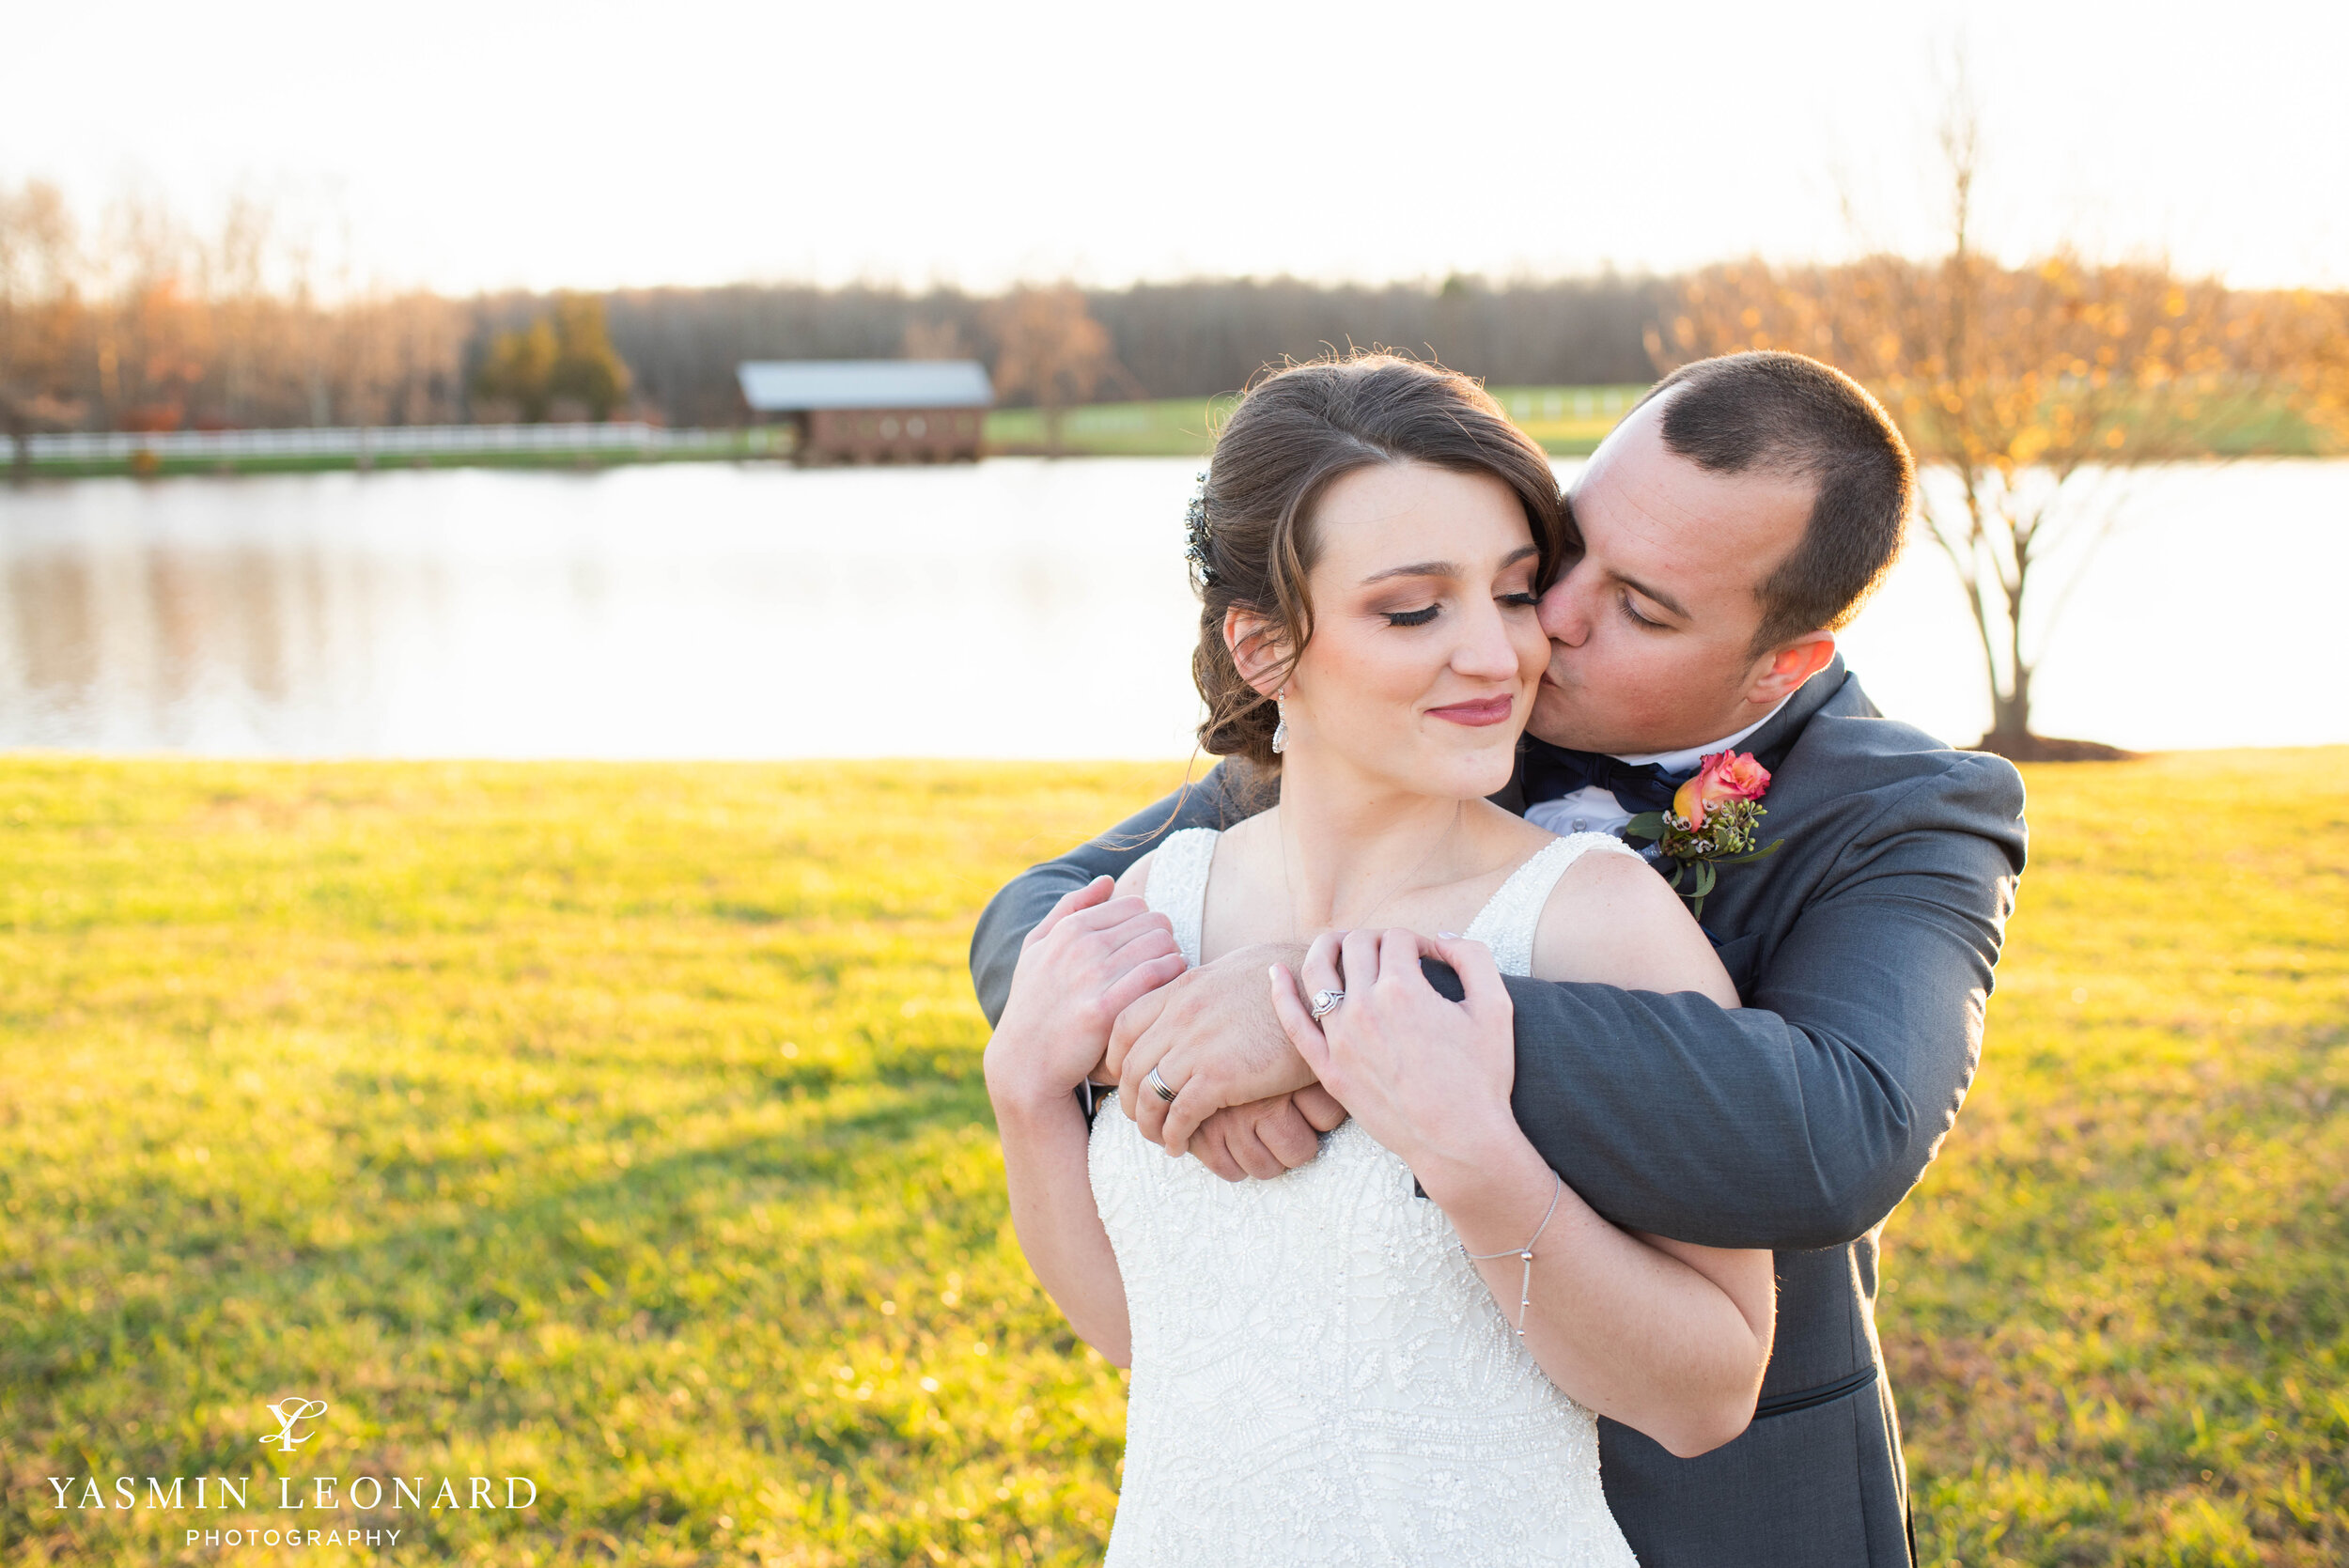 Jared and Katy - Adaumont Farms - High Point Weddings - NC Barn Weddings - Yasmin Leonard Photography-38.jpg